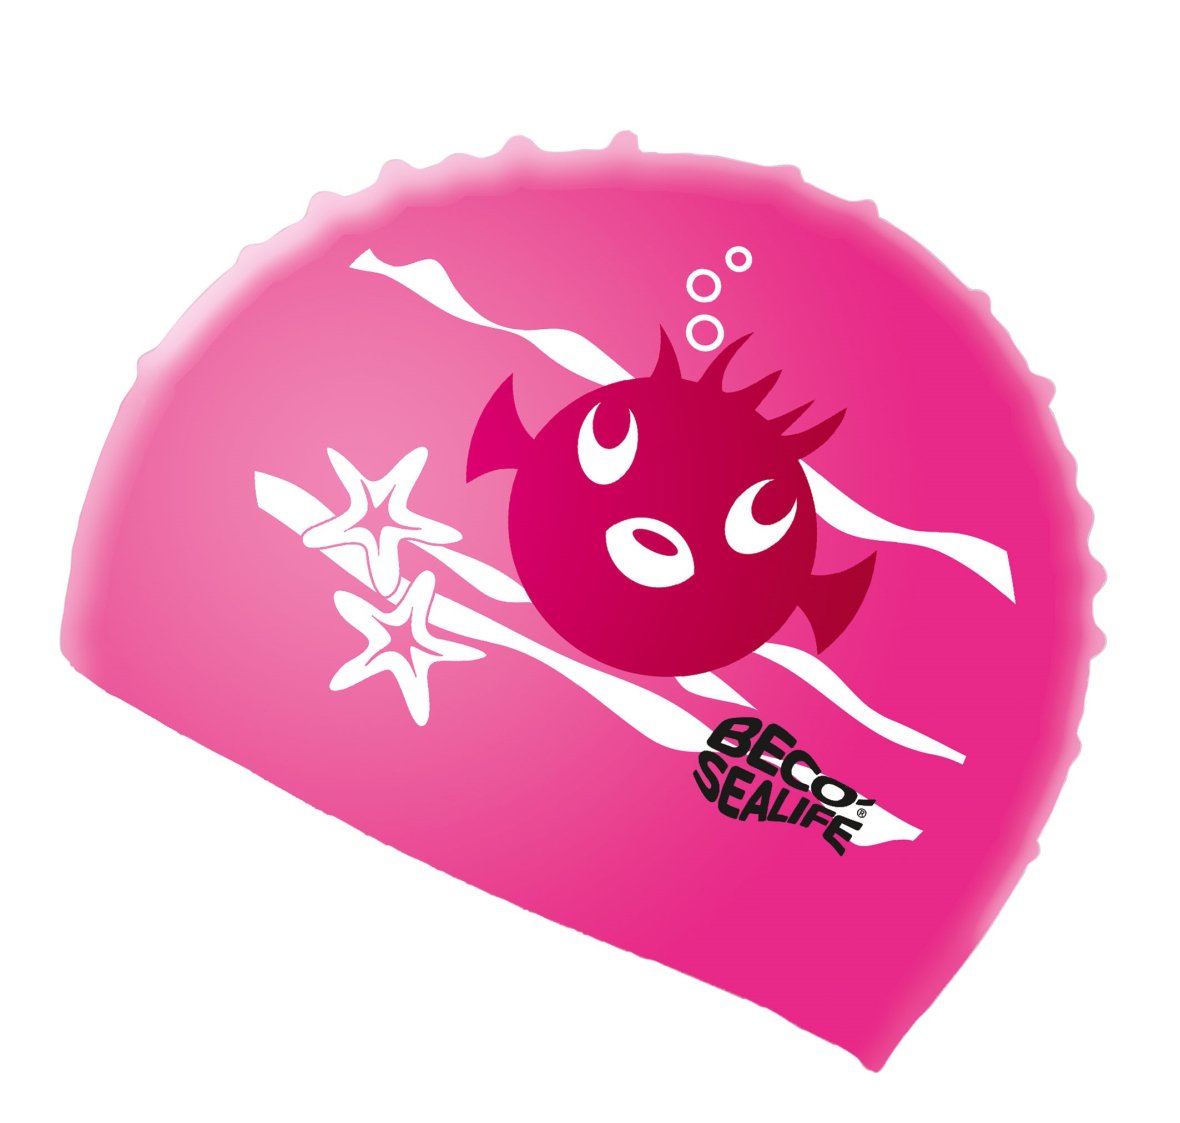 Beco Sealife swim set, pink